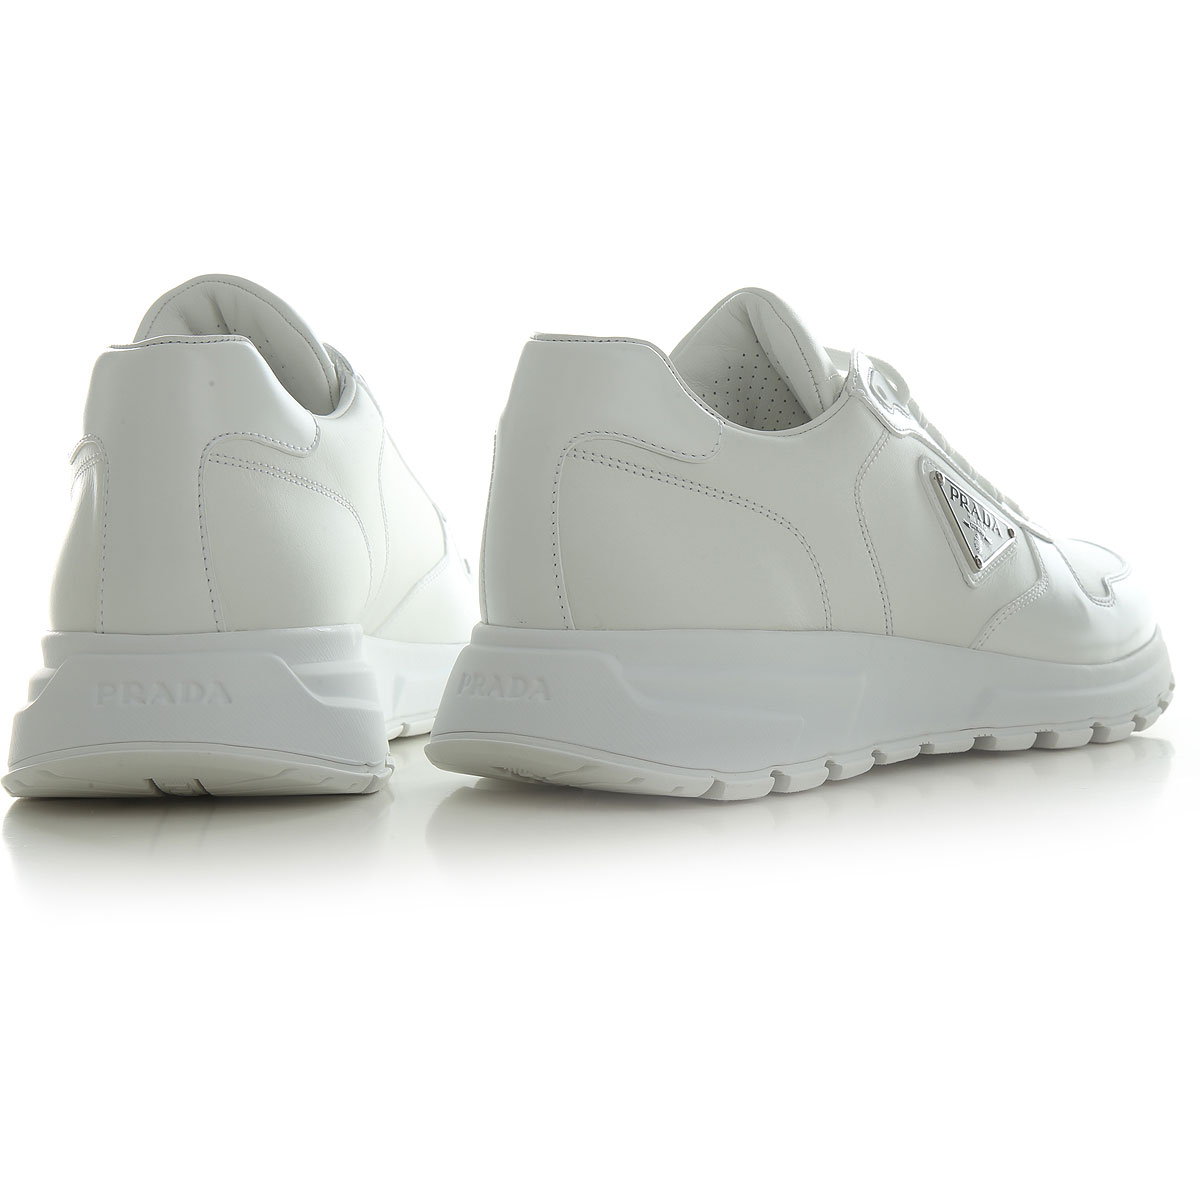 Mens Shoes Prada, Style code: 2ee369-3lki-fg0009